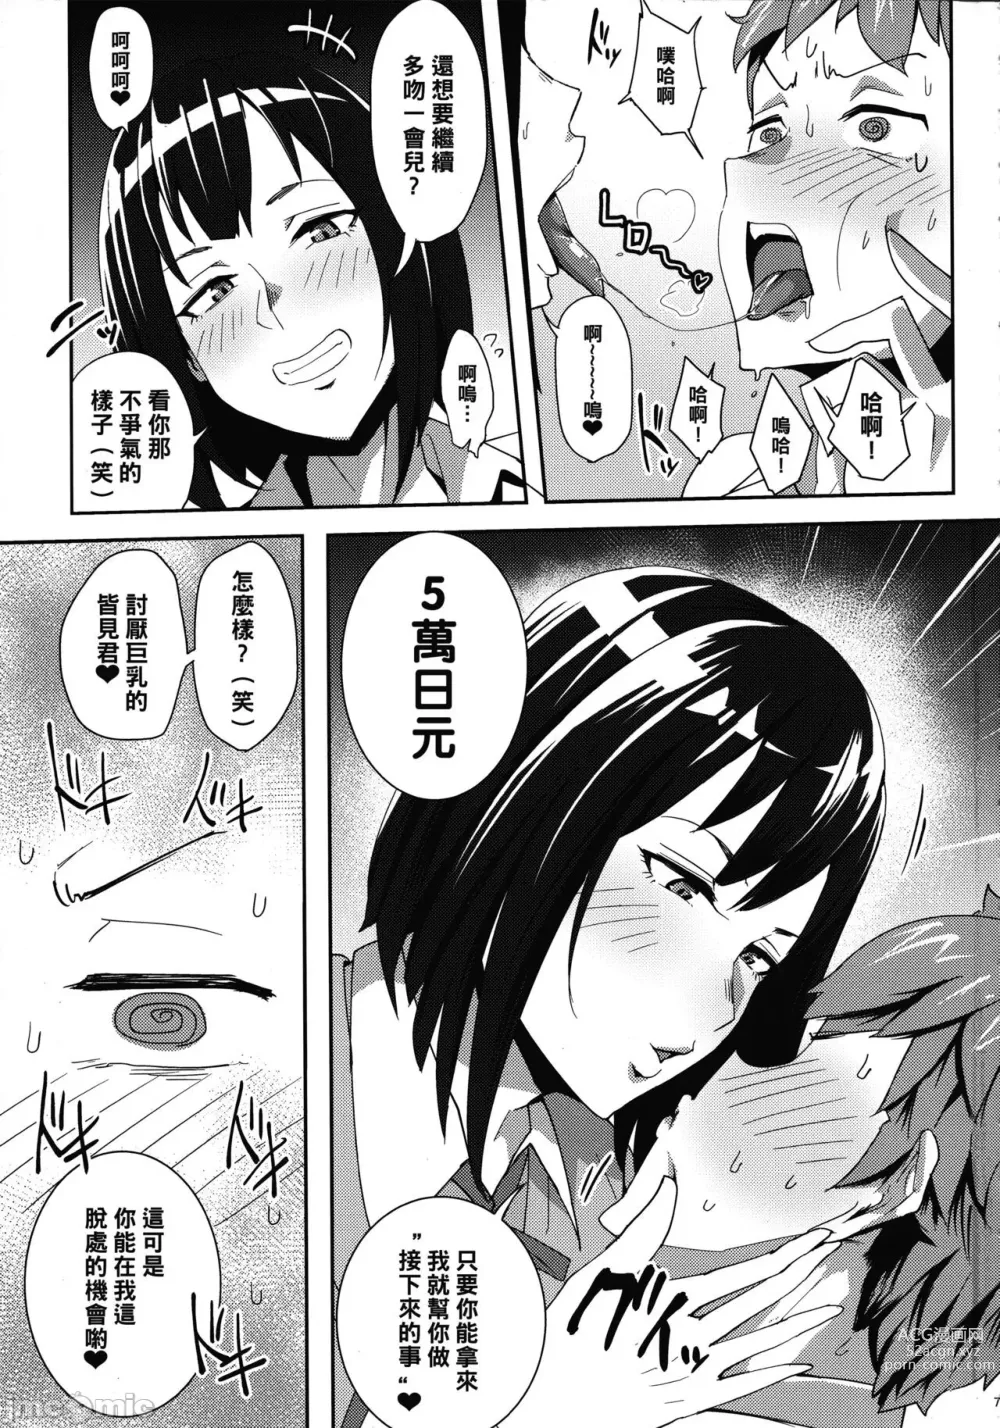 Page 6 of manga Minami-san Sensational